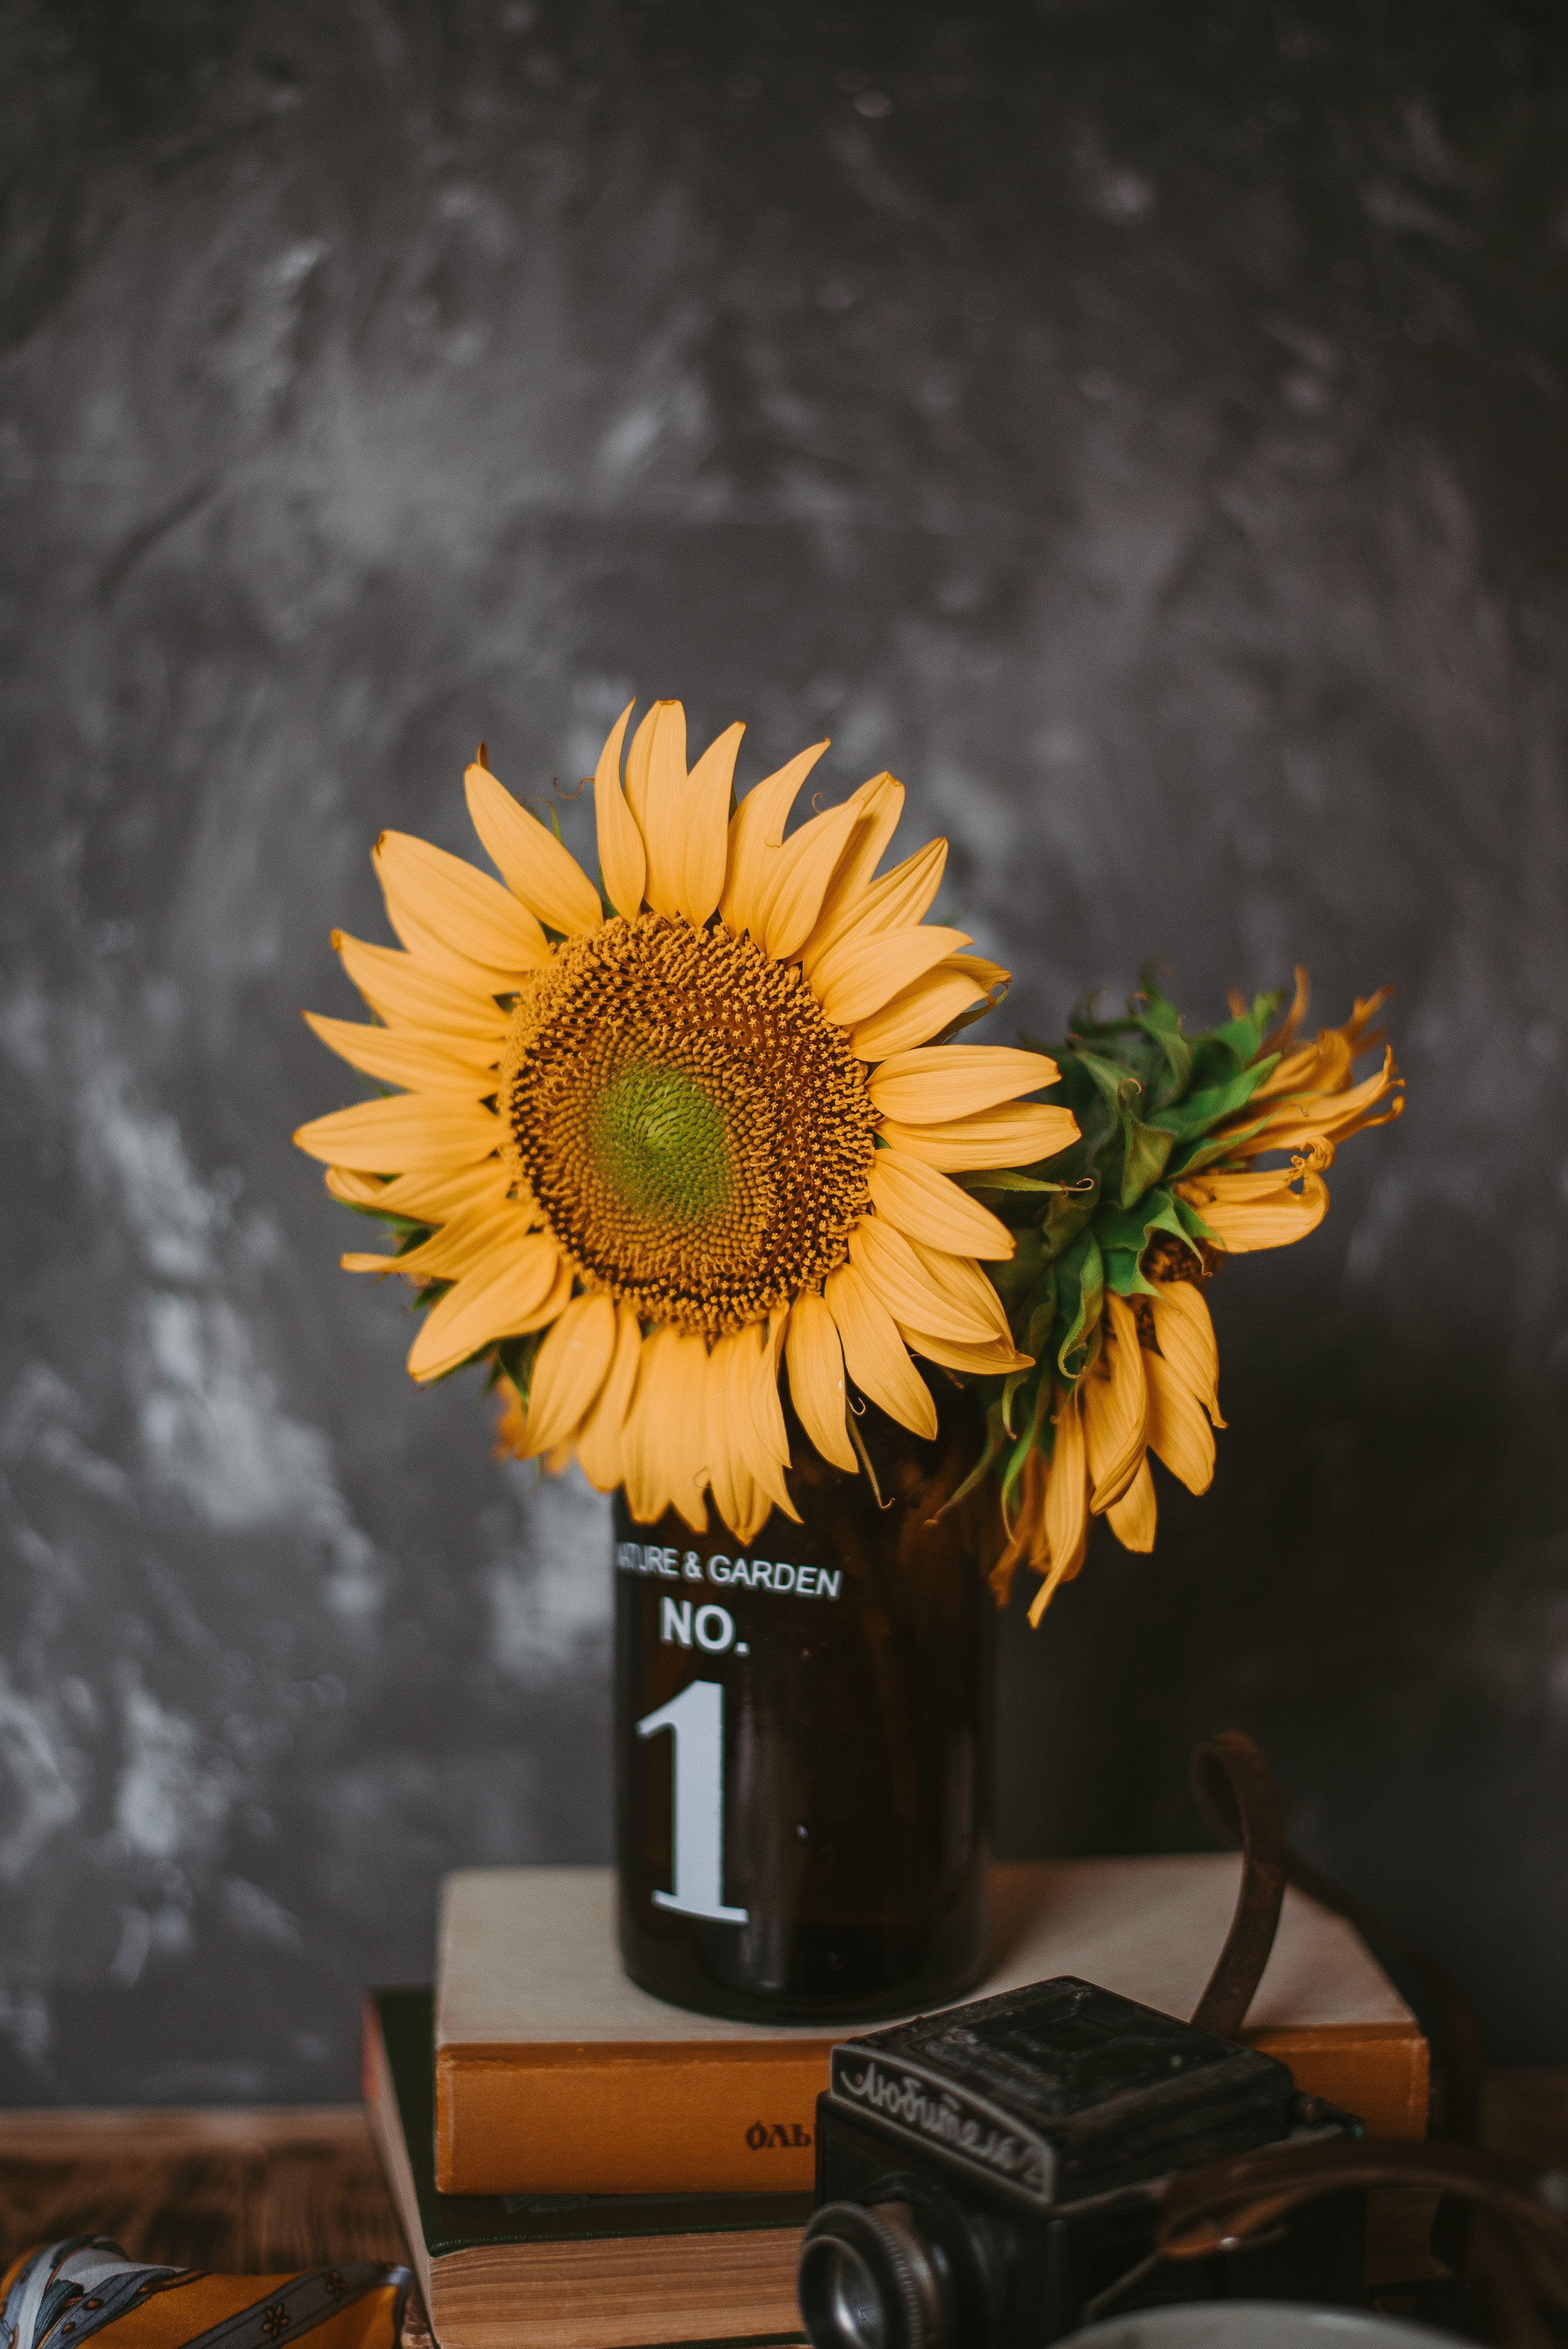 miscellanea, books, sunflowers, flowers, miscellaneous, vase, camera mobile wallpaper